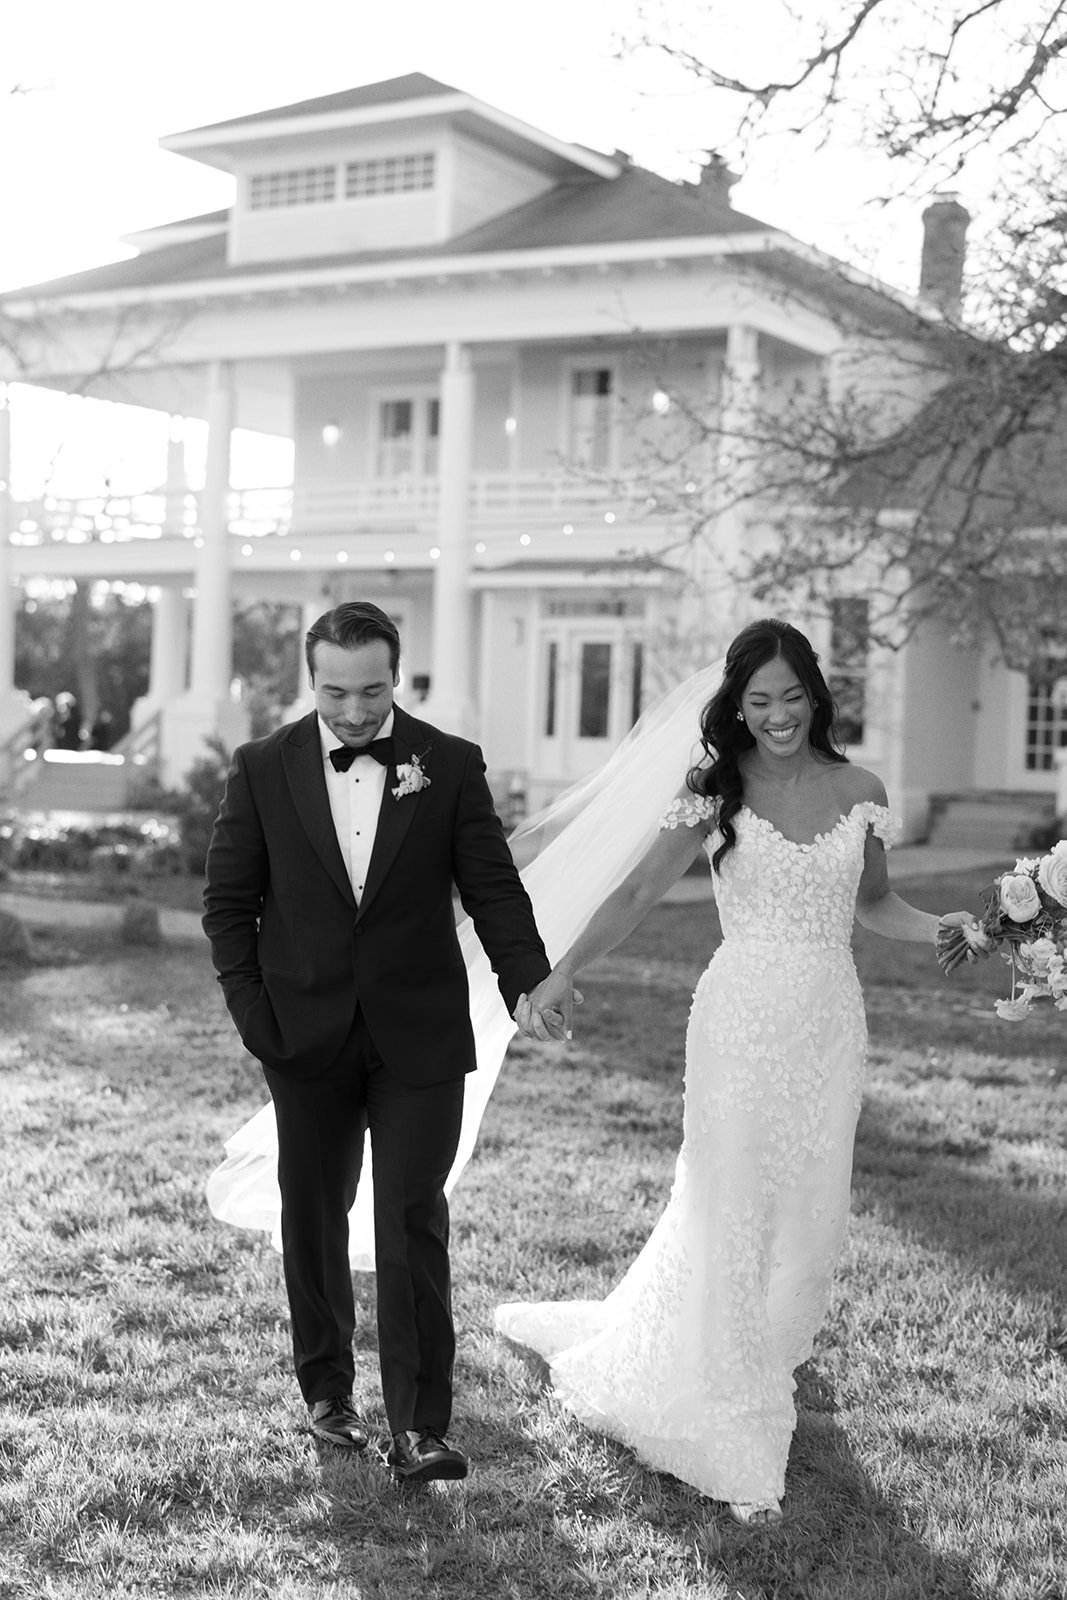 Best-Austin-Wedding-Photographers-Elopement-Film-35mm-Asheville-Santa-Barbara-Grand-Lady-175.jpg